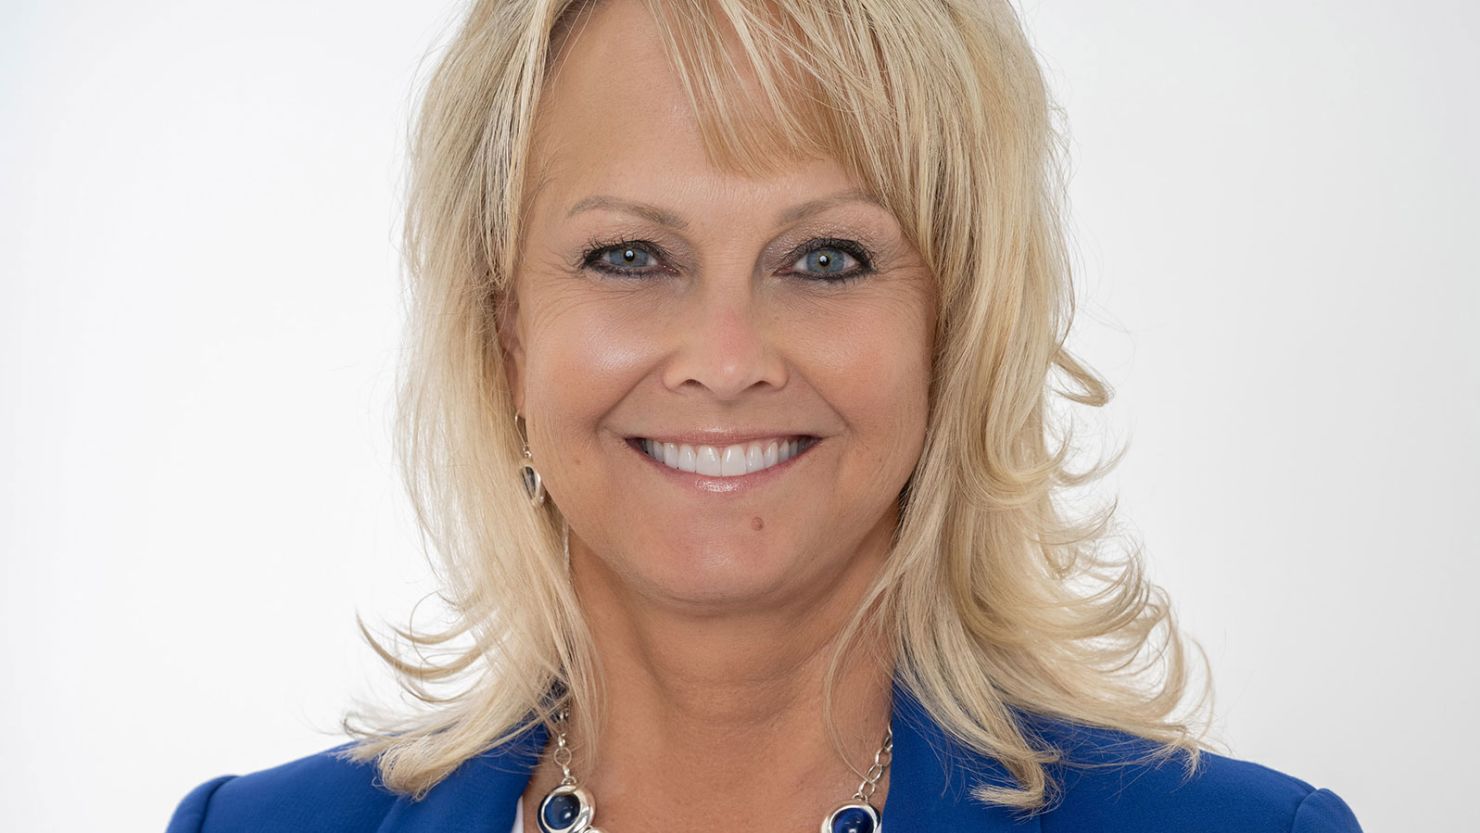 Tracy Kasper resigned as president of the National Association of Realtors.